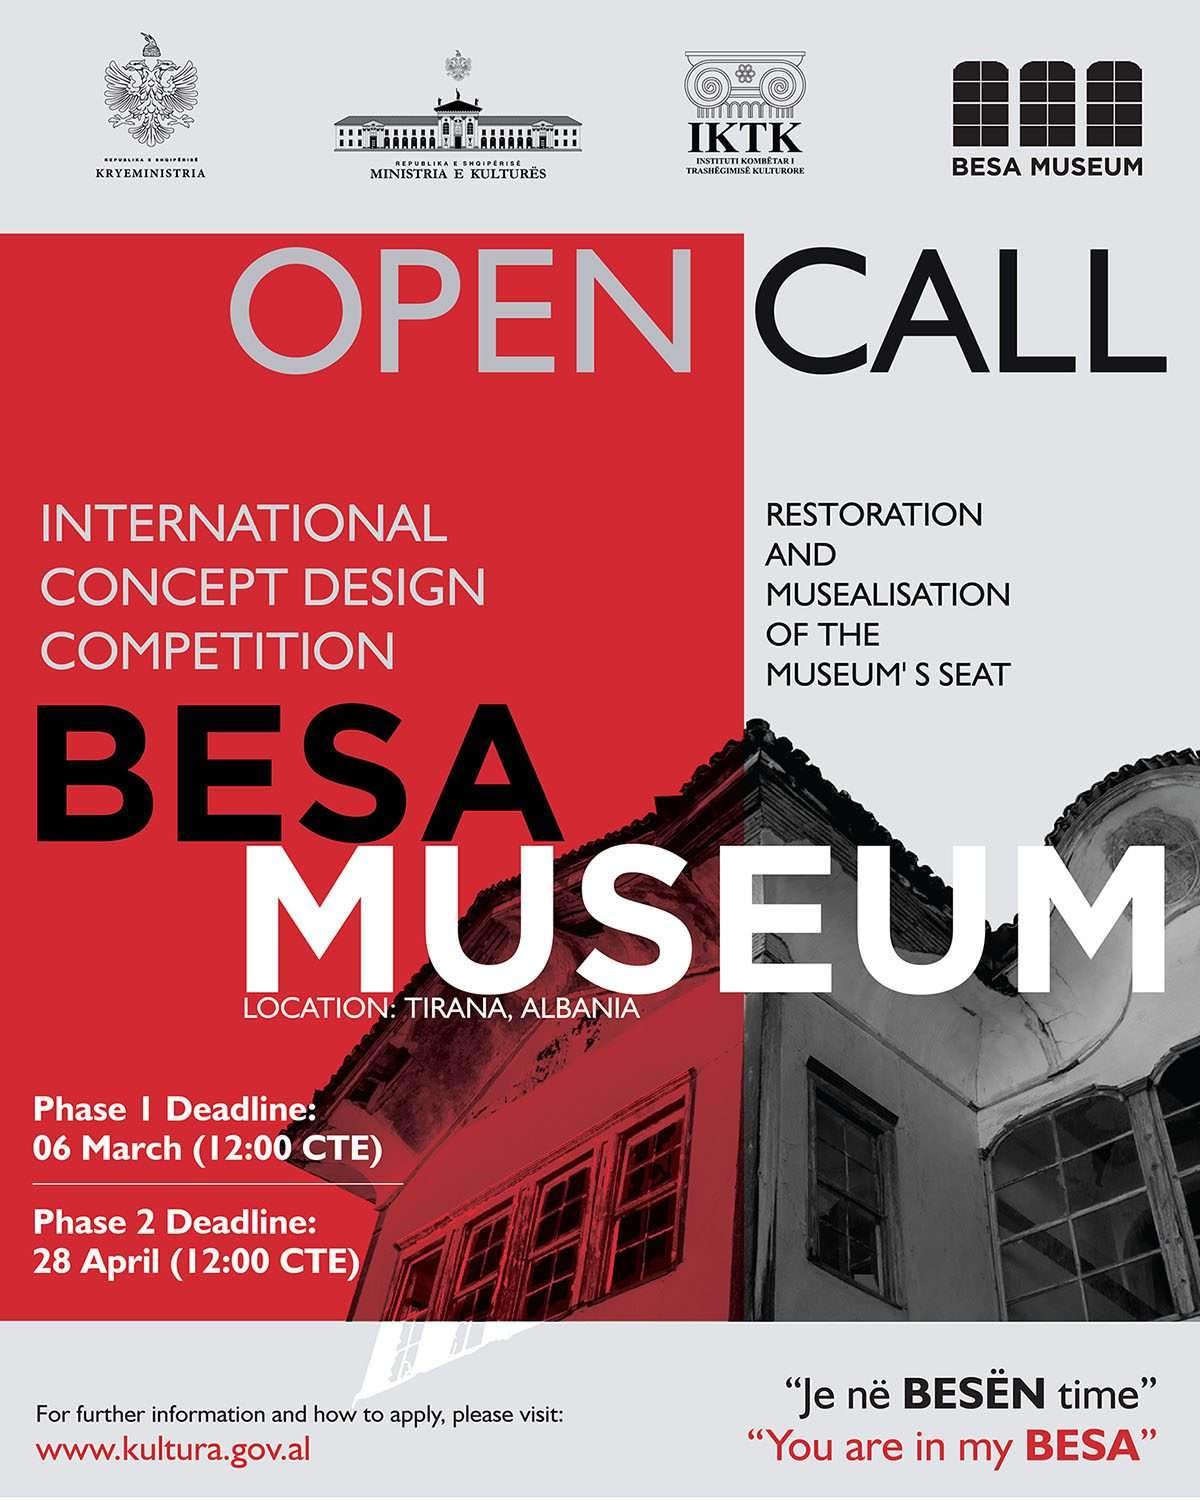 International concept design competition – Besa Museum in Tirana